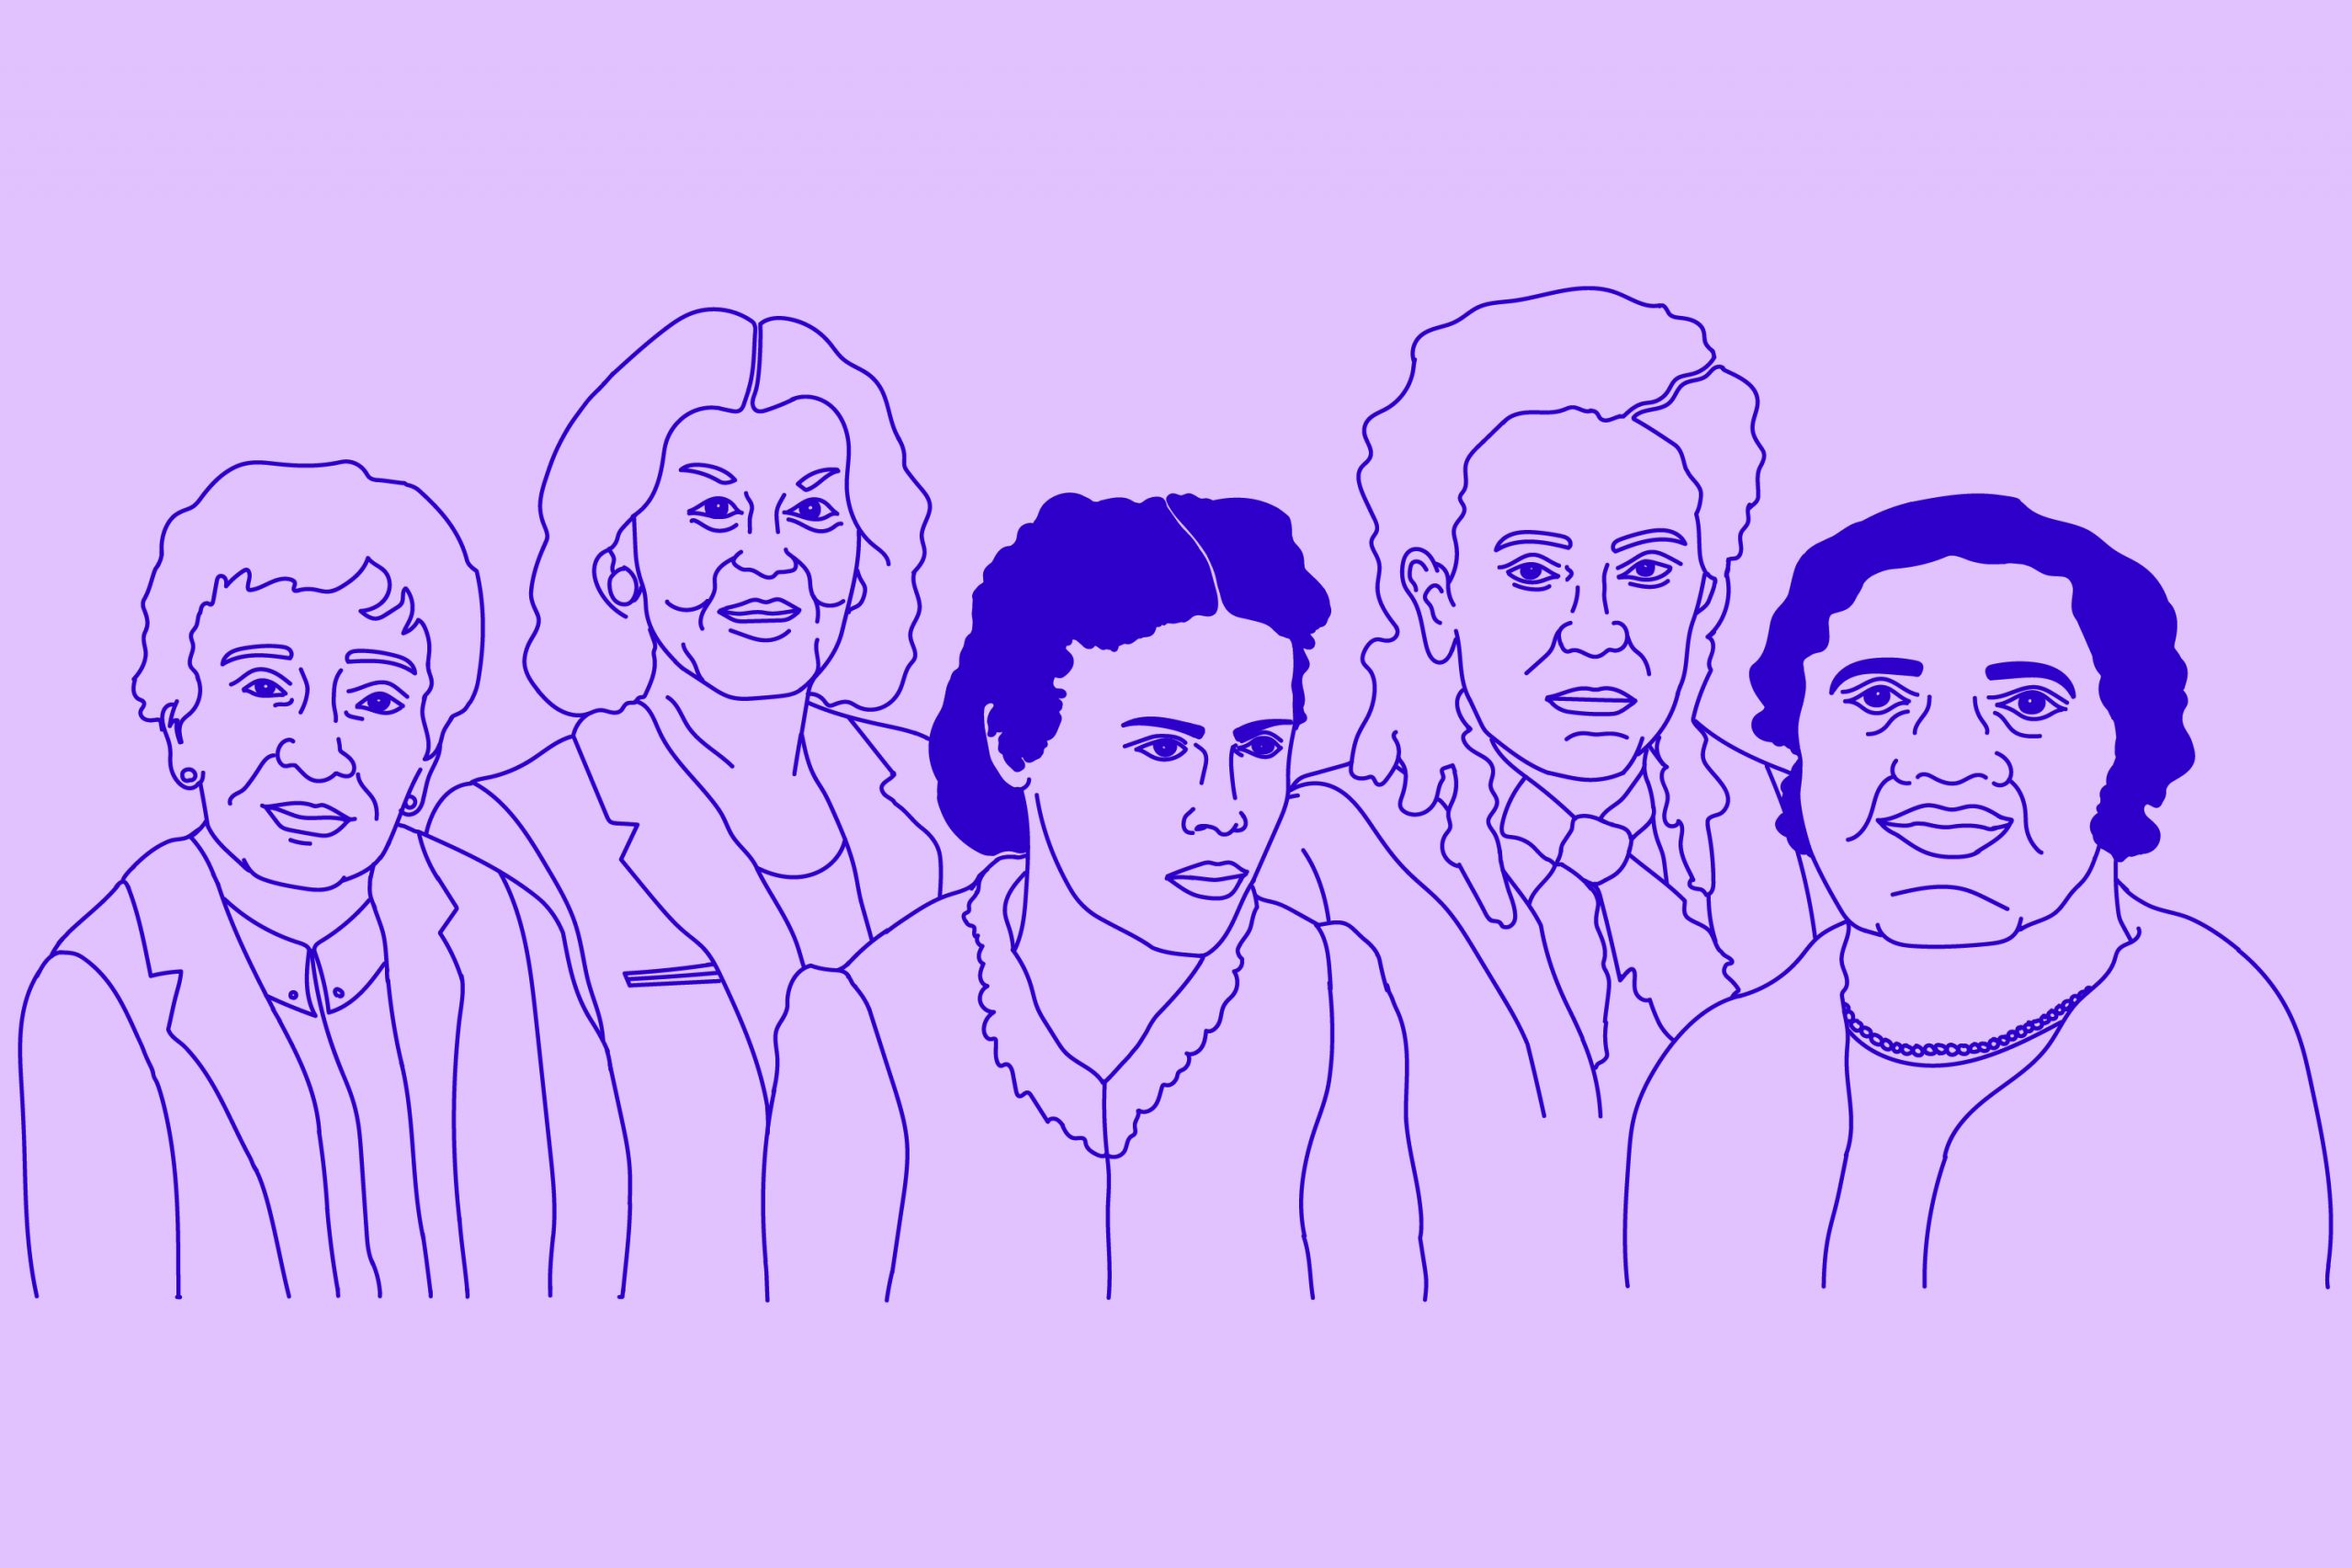 Ruth Johnson Colvin, Karen L. DeCrow, Sarah Loguen Fraser, Matilda Joselyn Gage, and Anna Short Harrington are important women in Syracuse history.